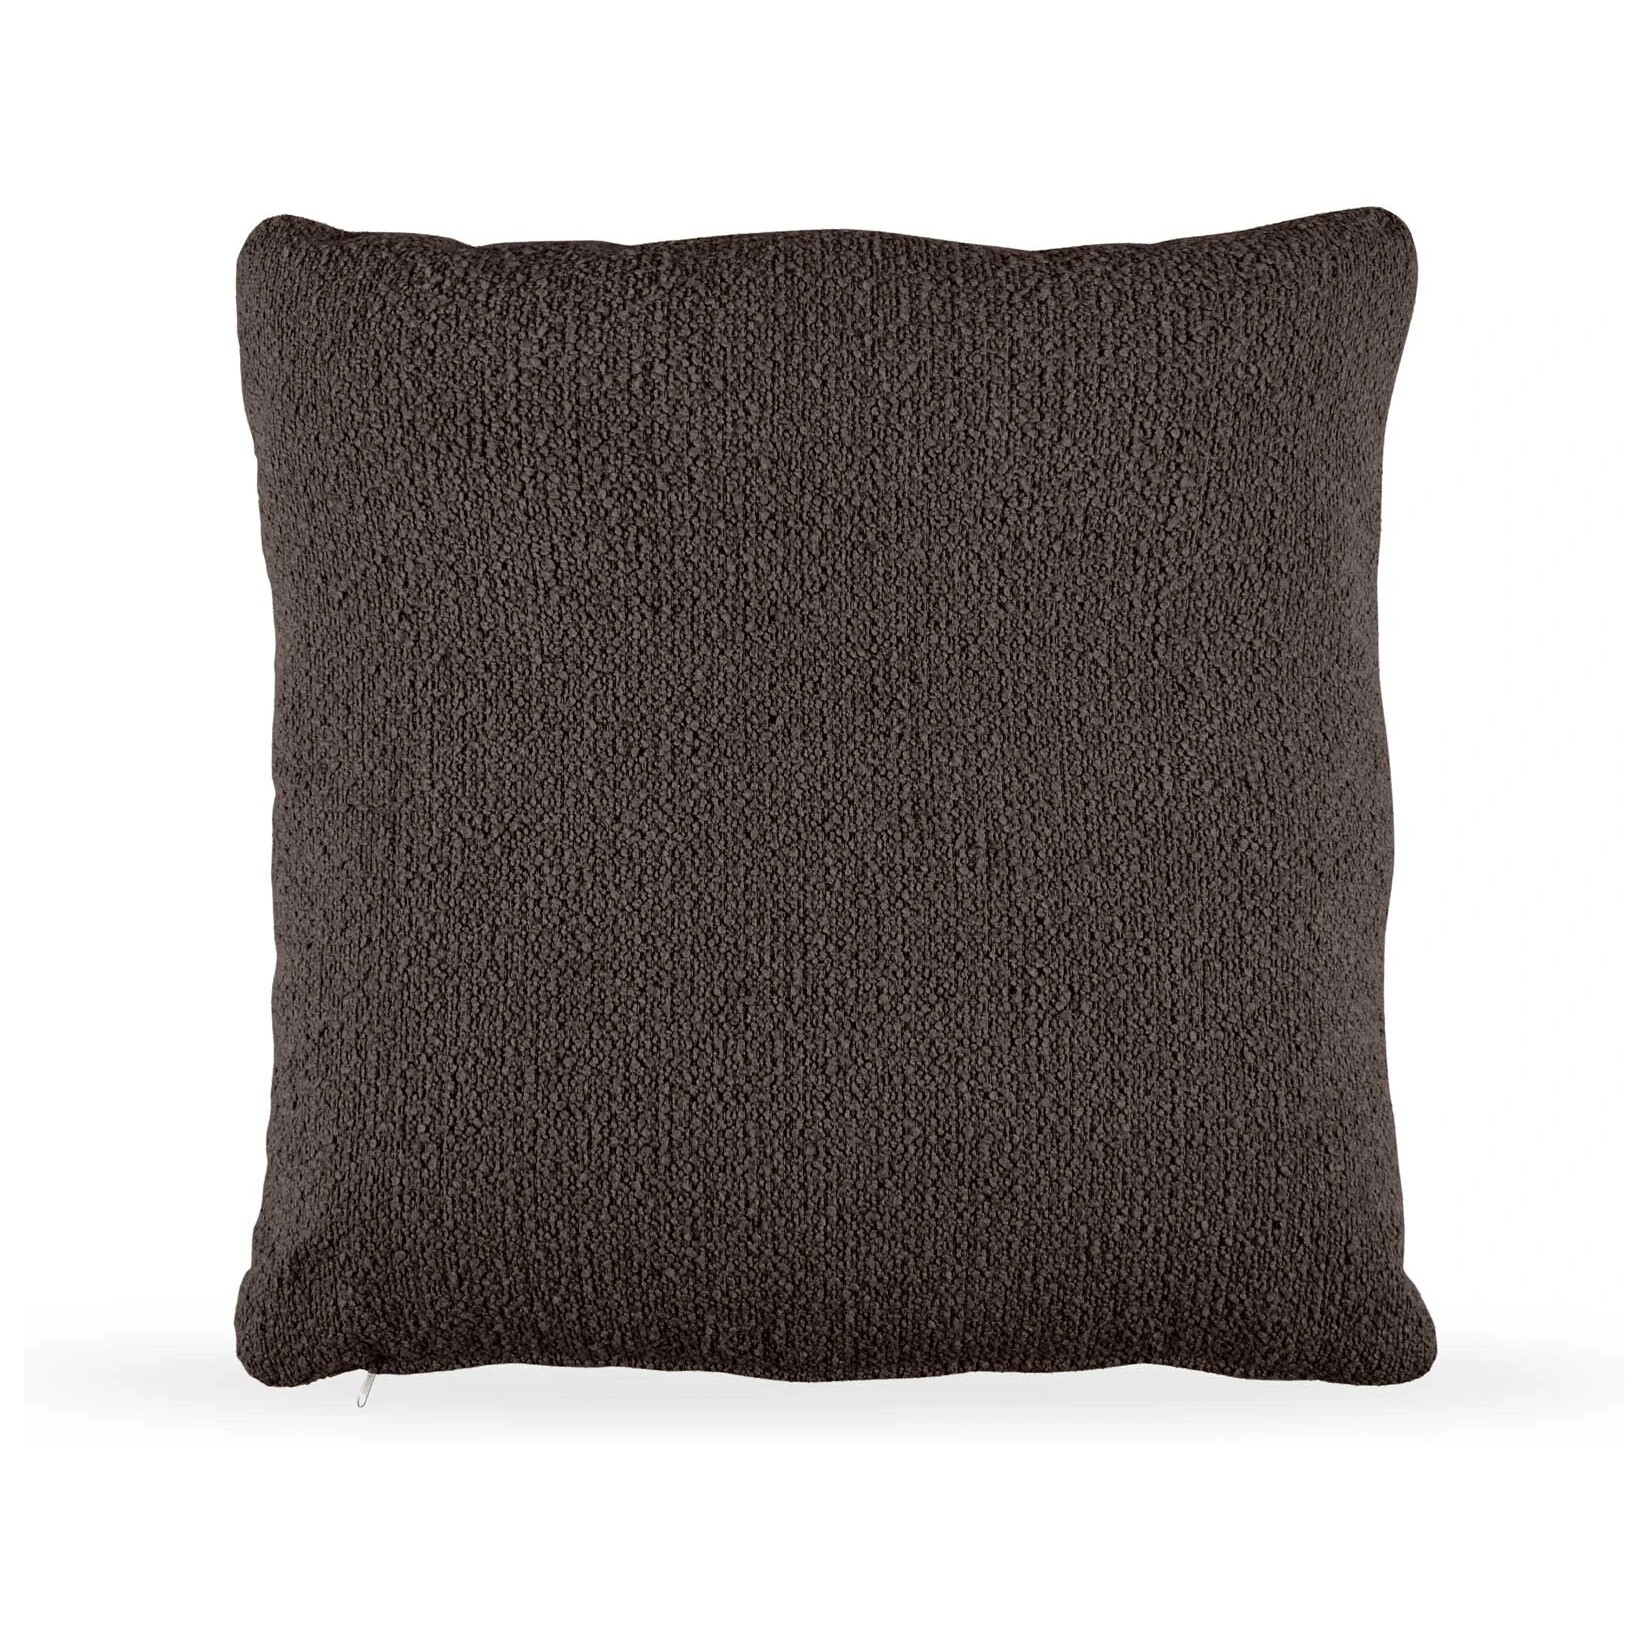 Подушка квадратная 70 см ткань Buckle braun коричневая Fabro